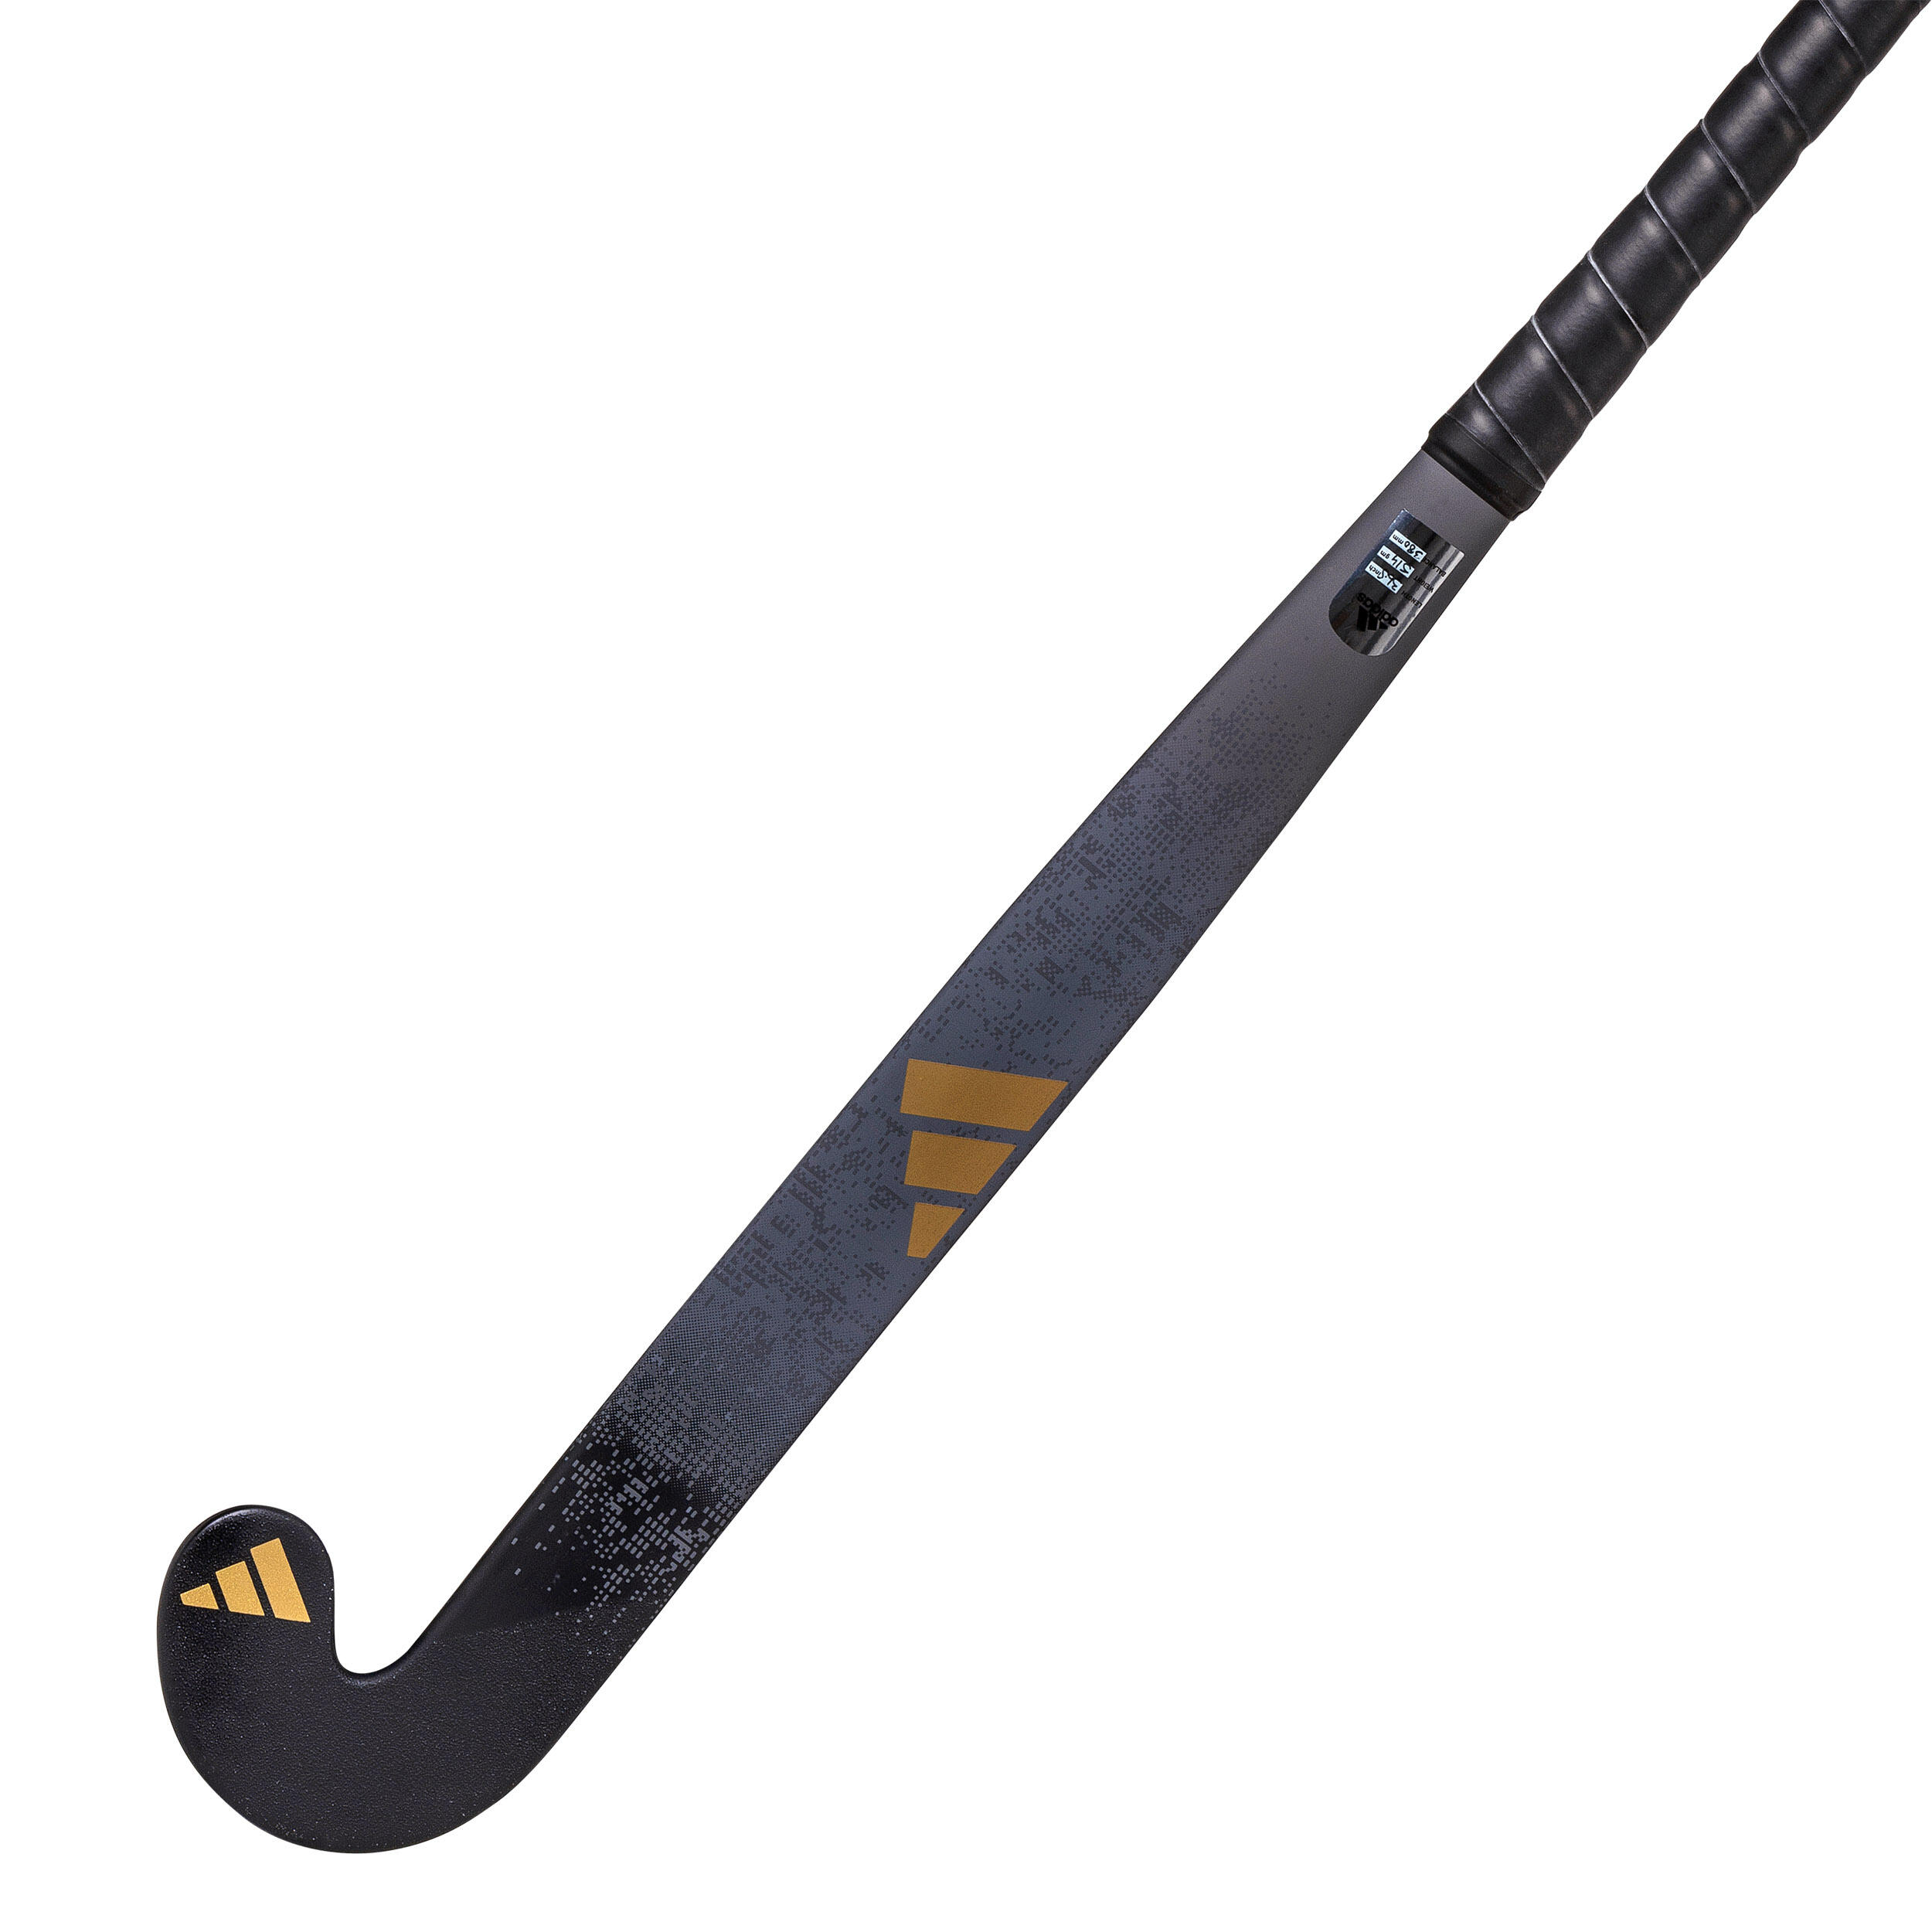 Adult Intermediate 20% Carbon Mid Bow Field Hockey Stick Estro .7 - Black/GoldBlack and gold 3/13